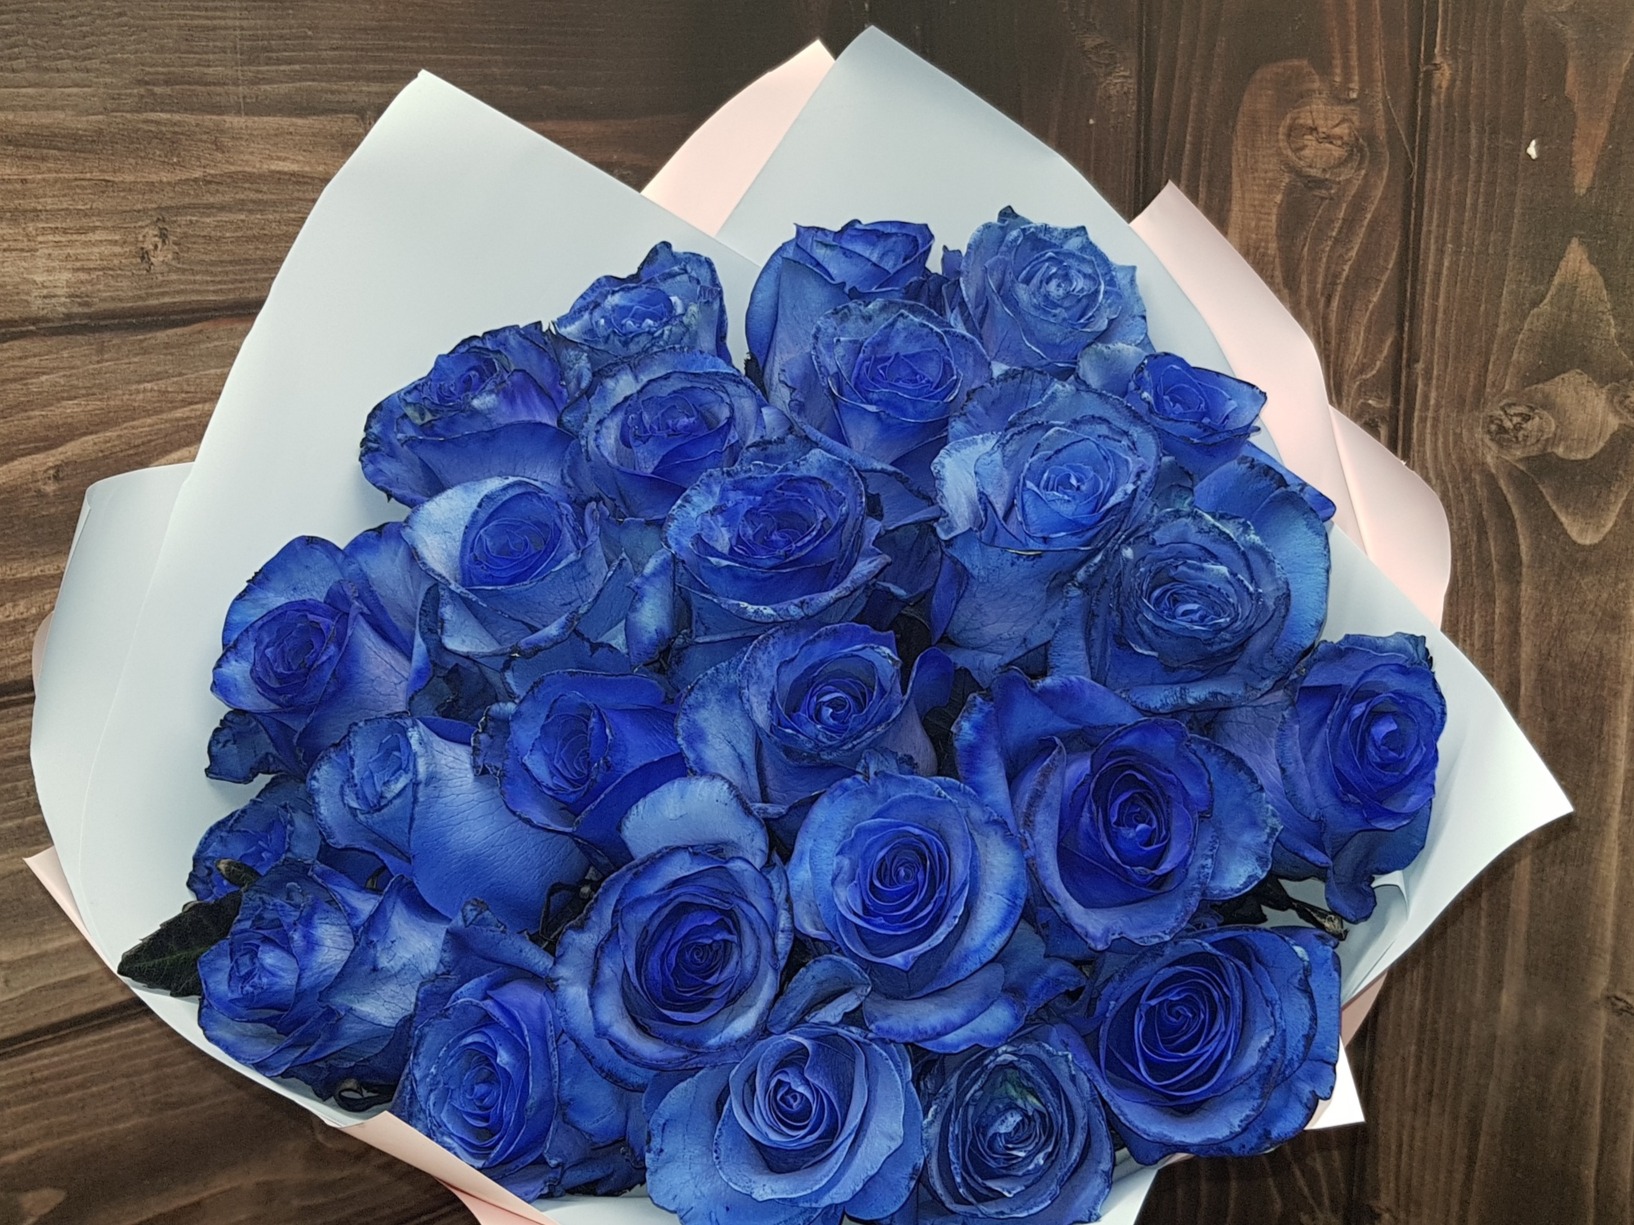 Blue value. Букет синих роз. Букет из синих роз. Синие розы в коробке.